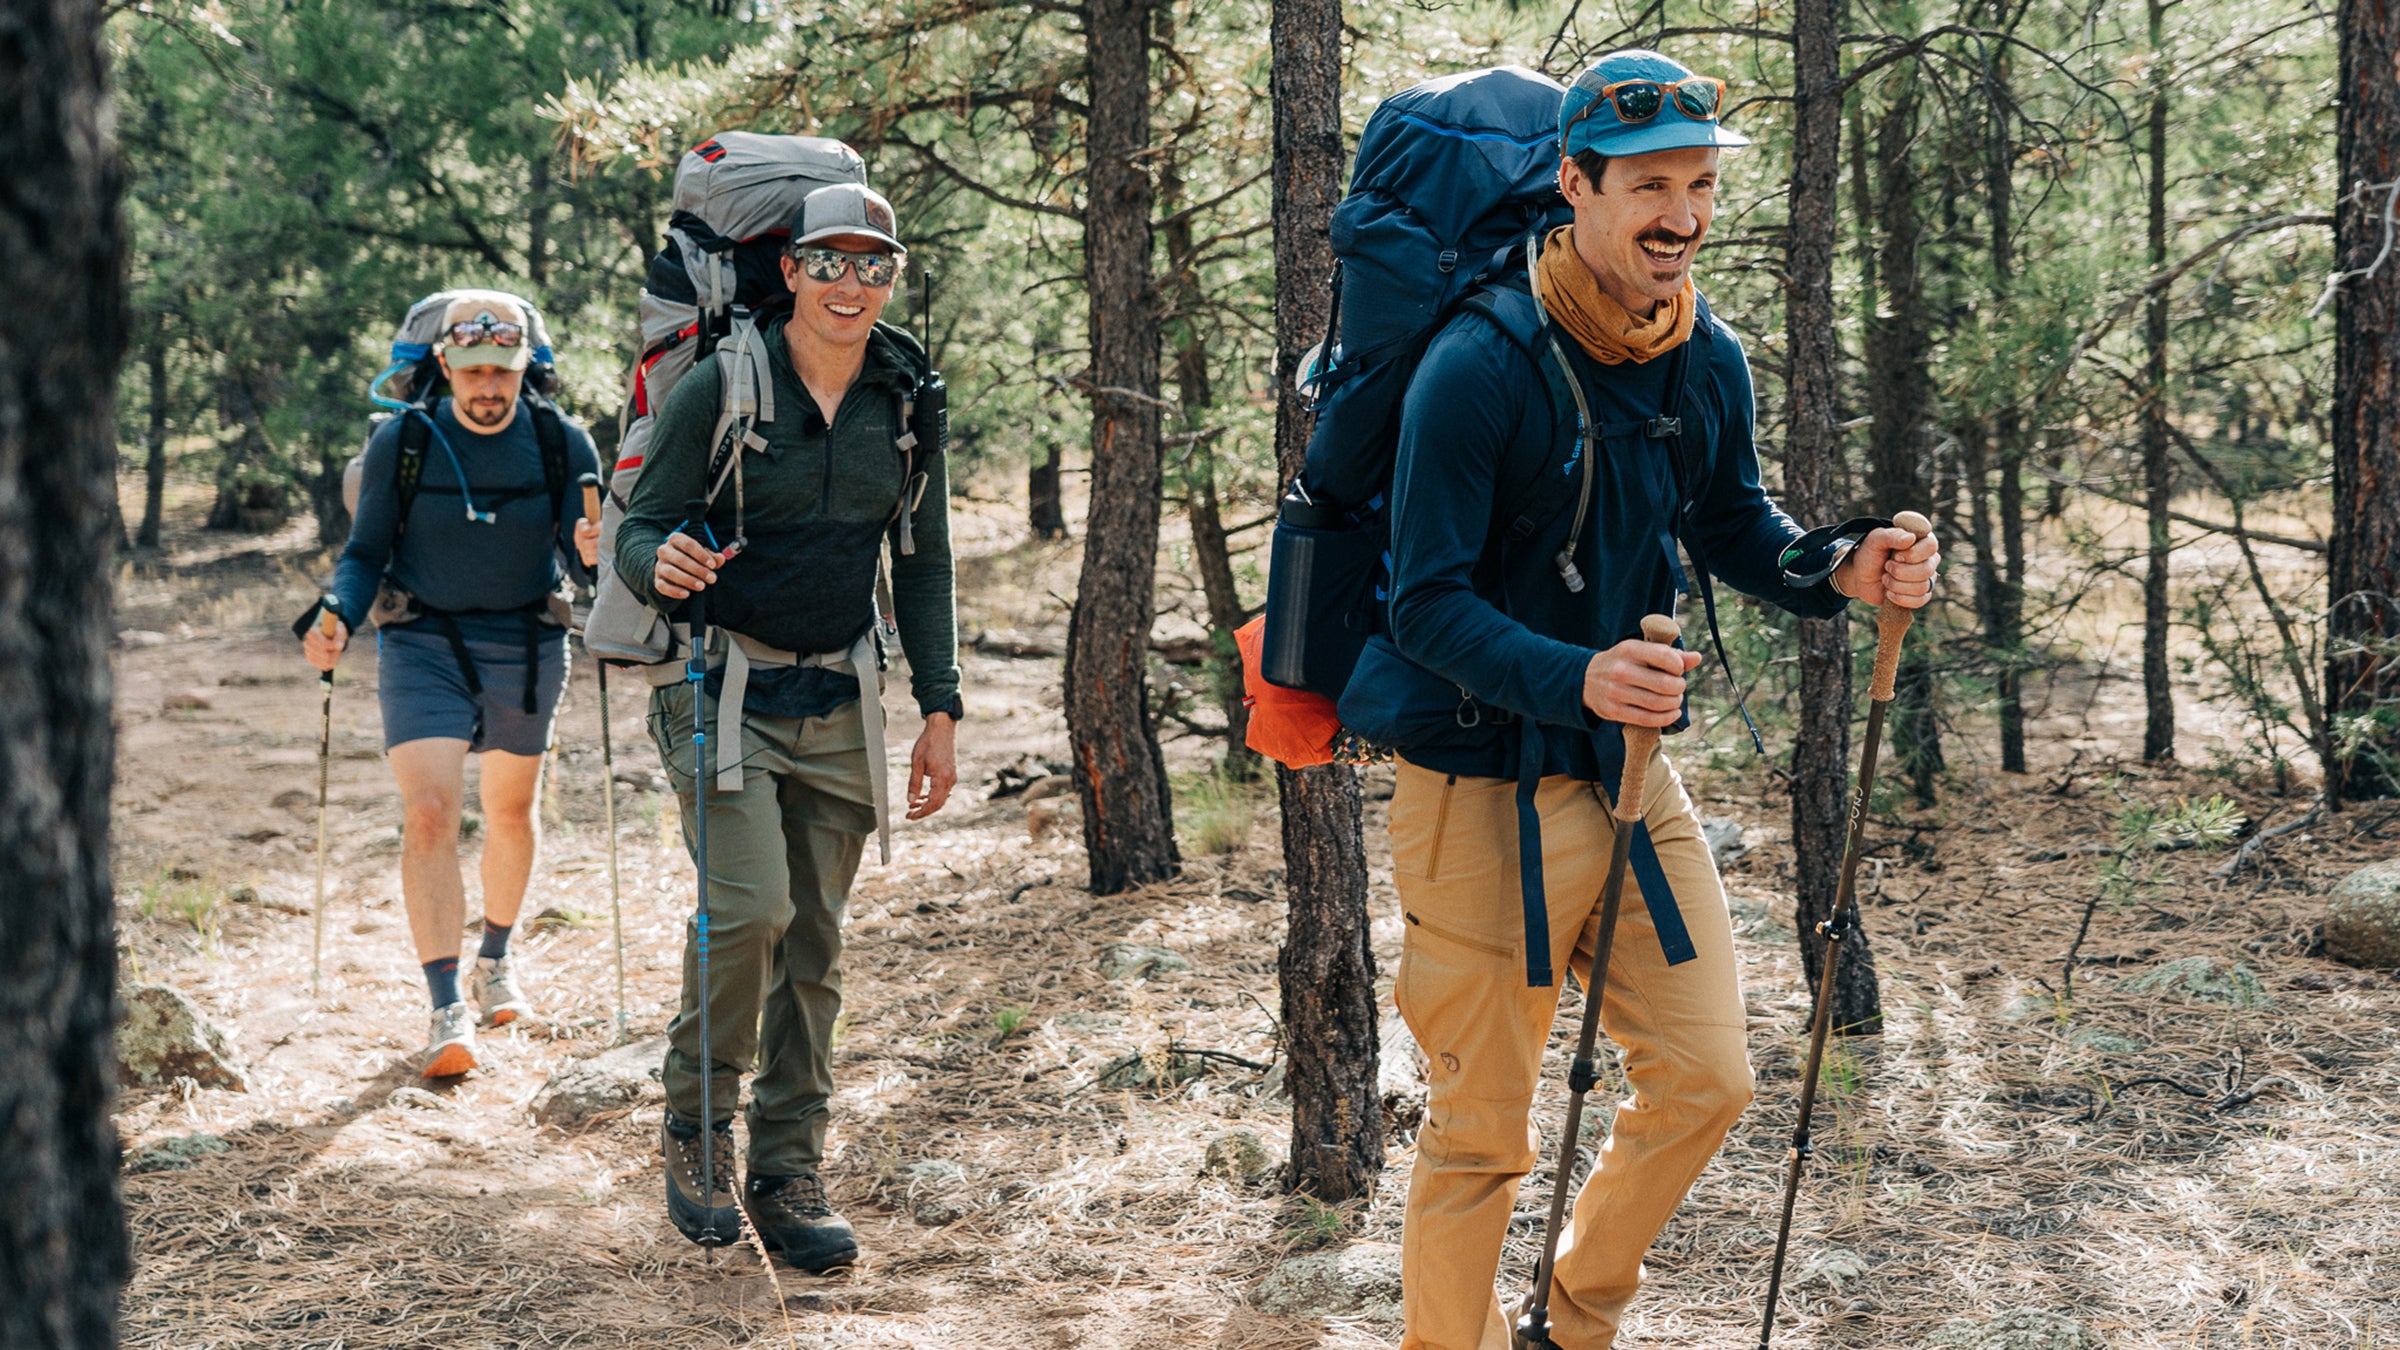  Men's Long Sleeve Hiking Shirts-Nylon Quick Dry Tops